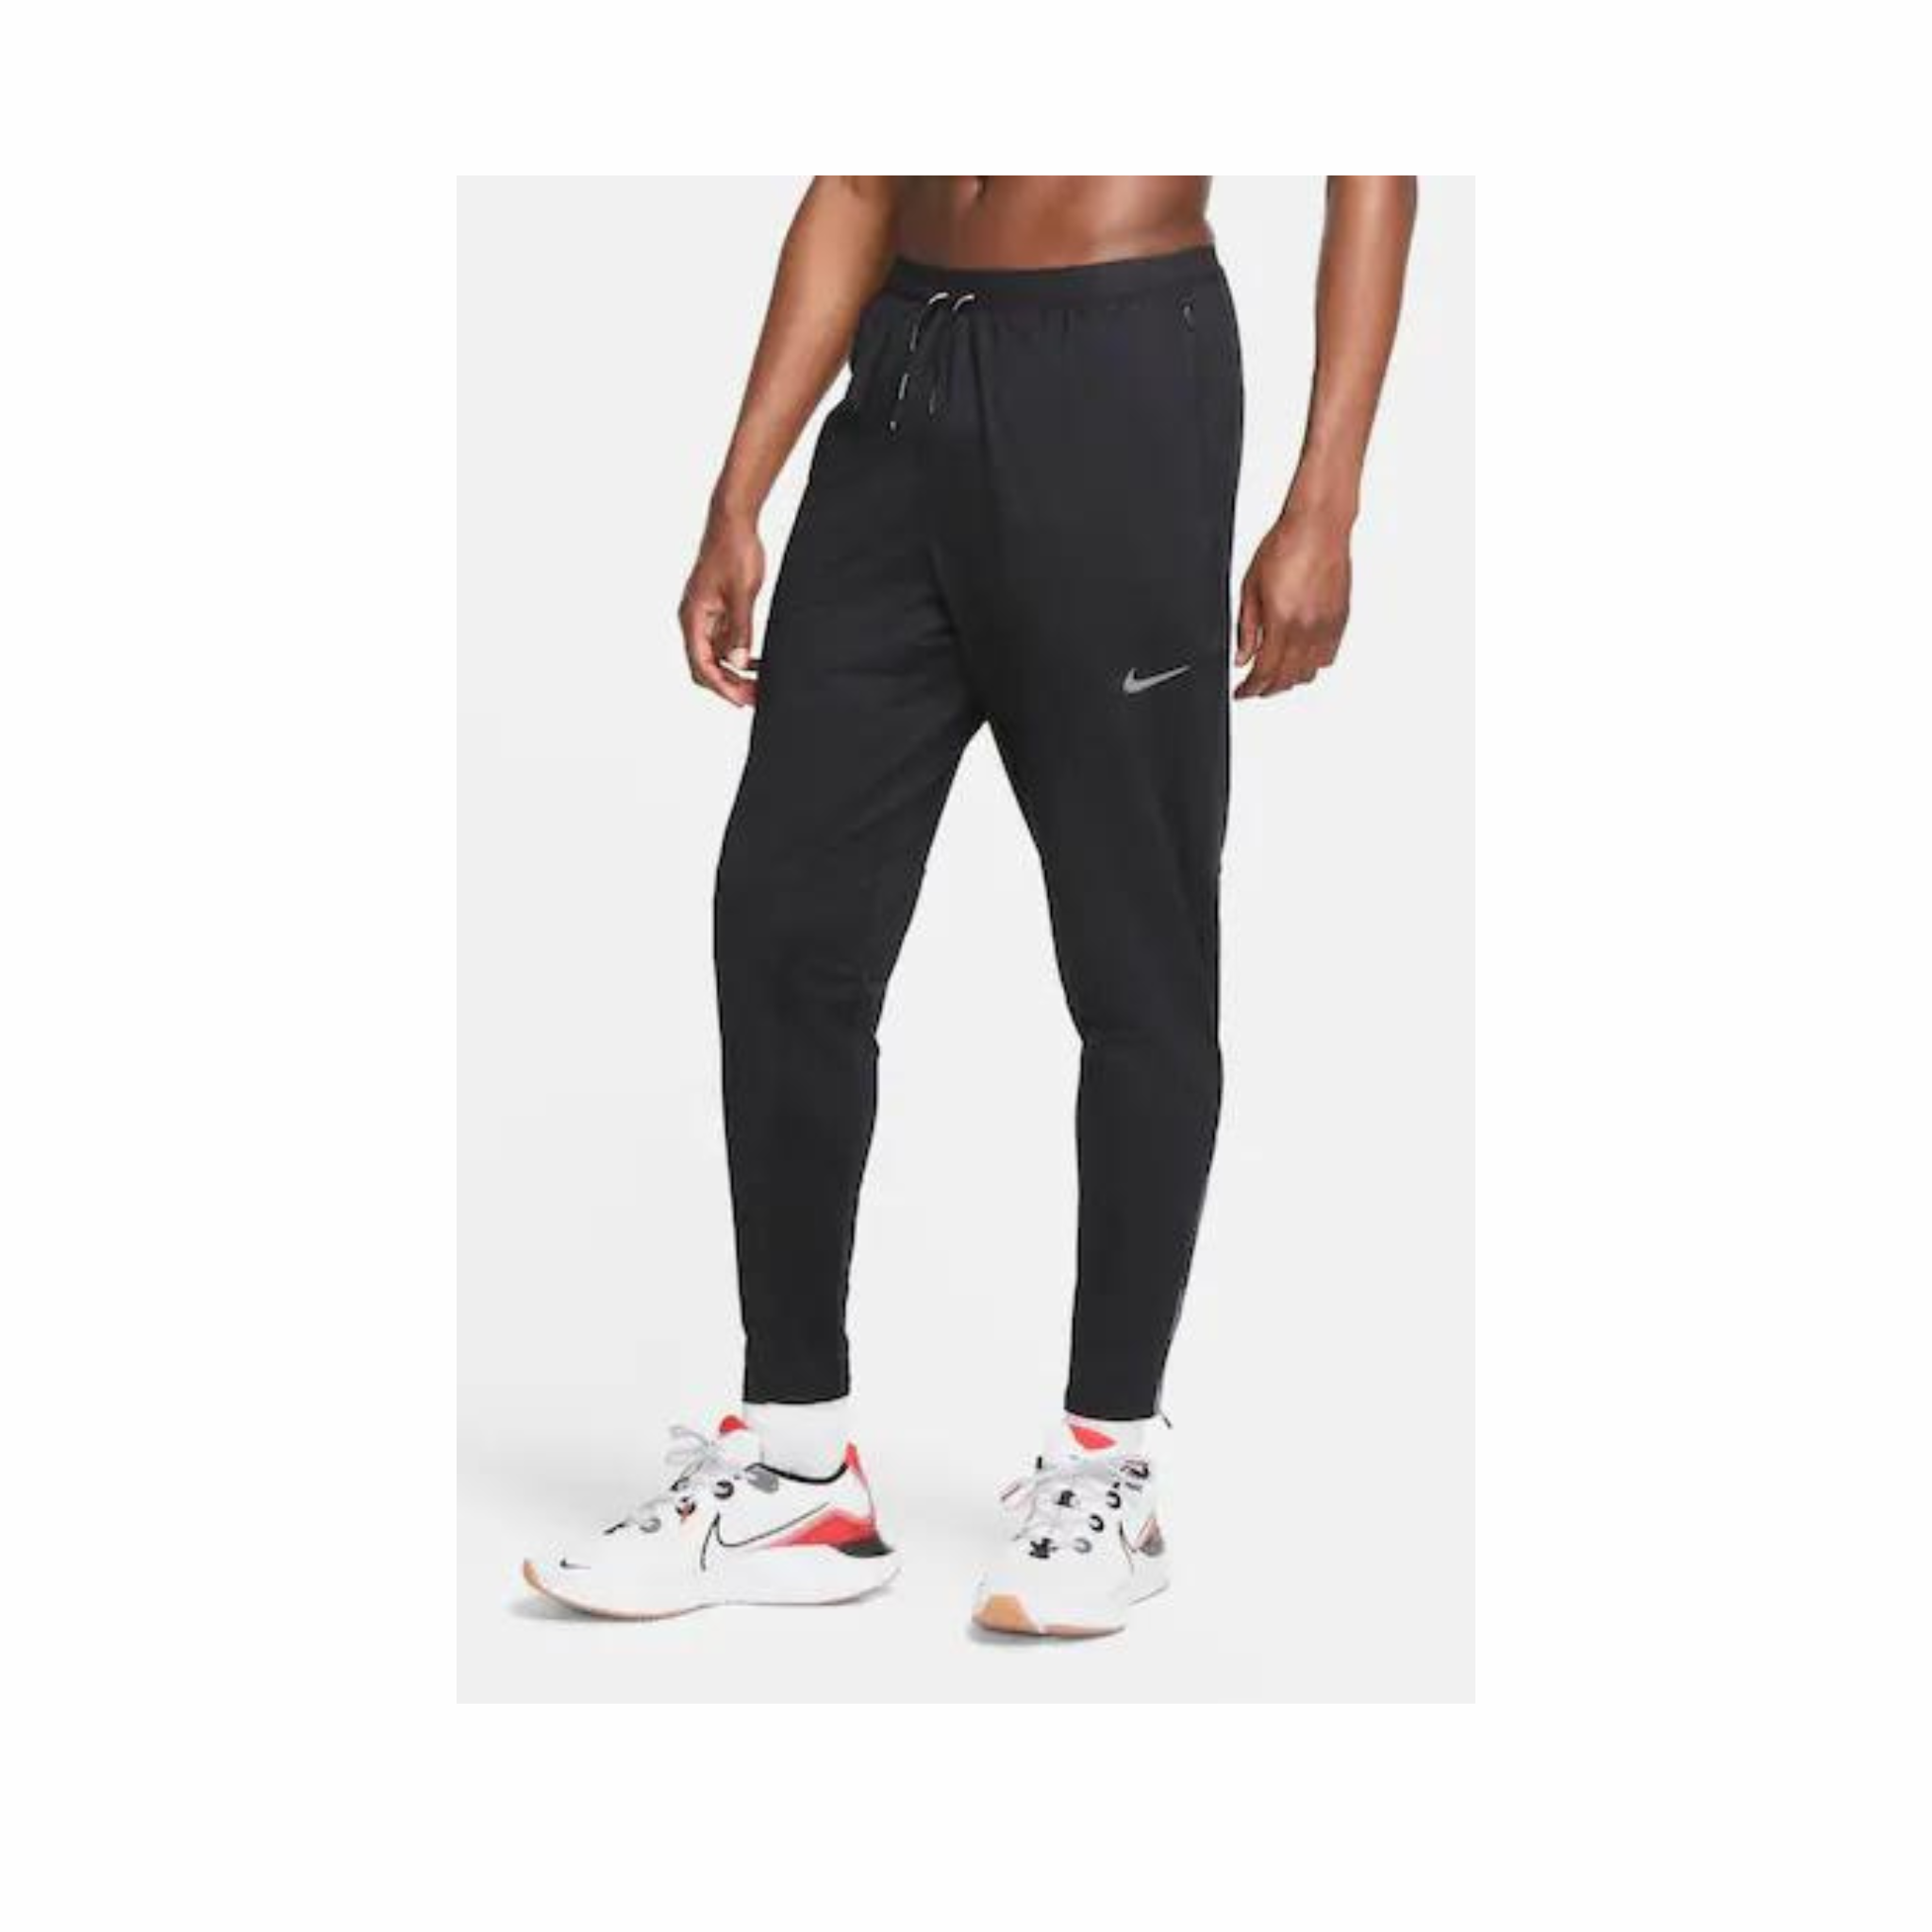 Nike Phenom Elite Knit Running Gym Pants Men's Size Large Grey CU5504-077  for sale online | eBay